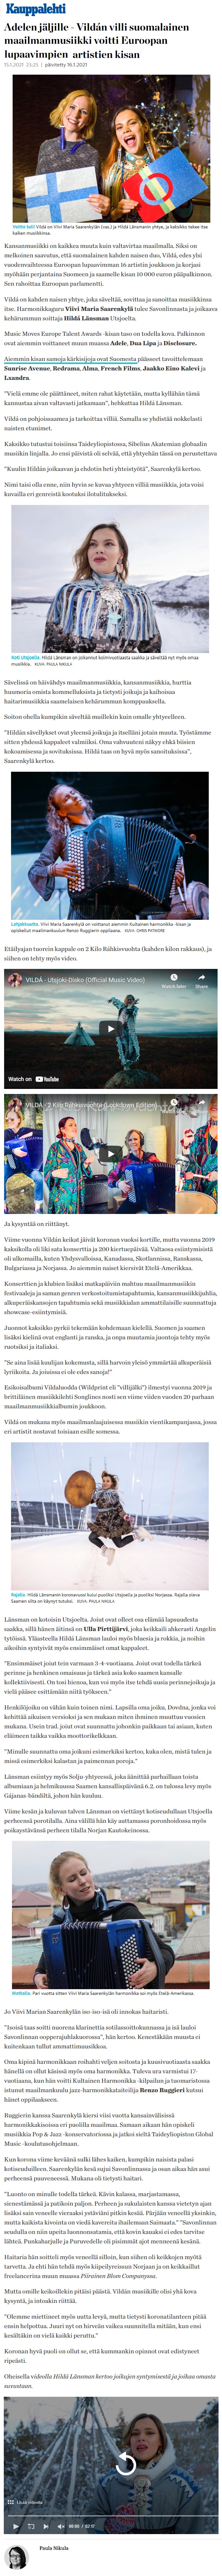 Kauppalehti (Finland), 15.1.2021